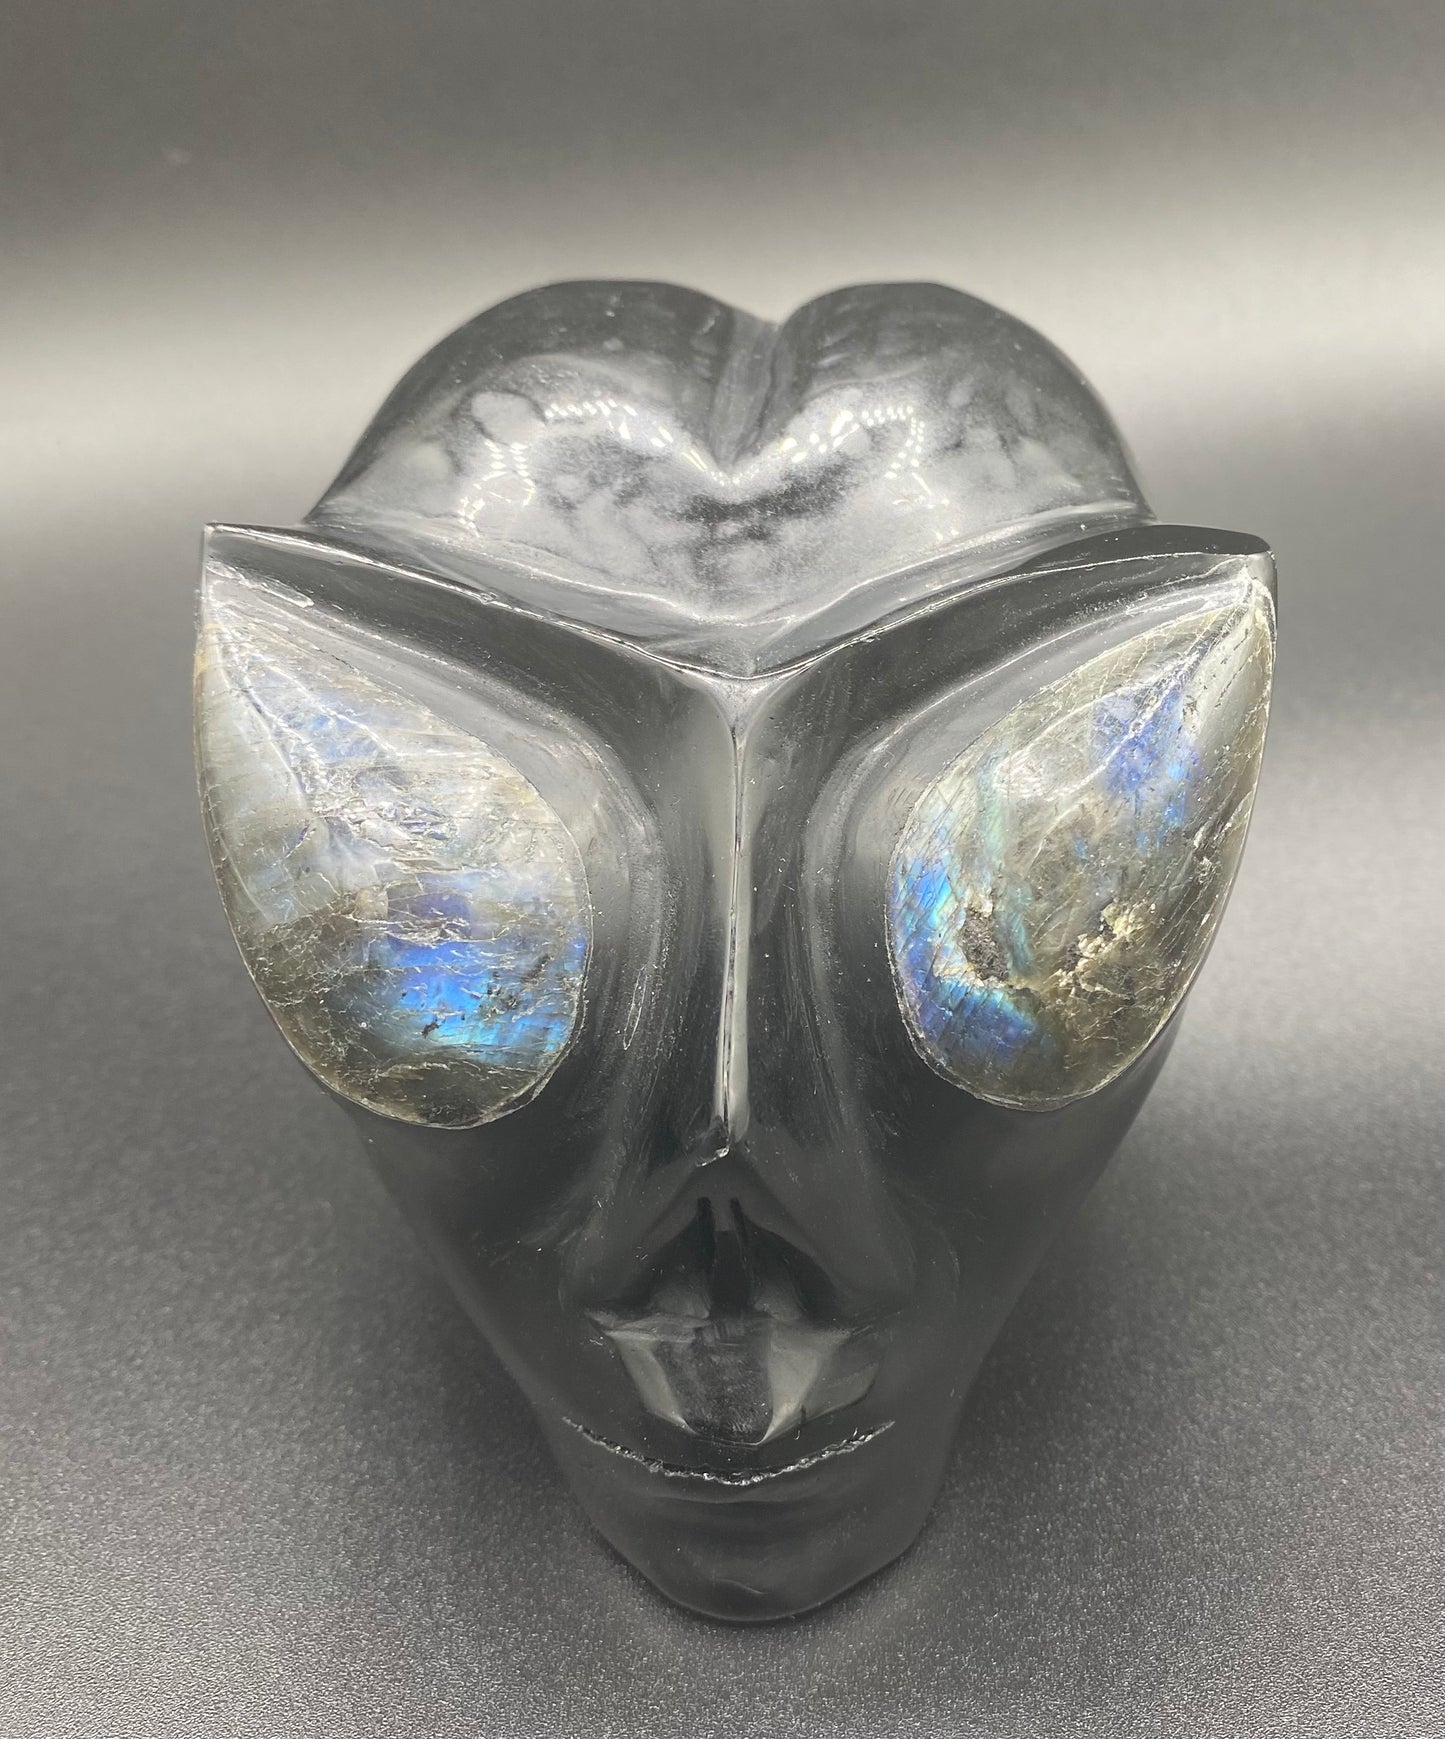 Black Obsidian Atlien Head with Labradorite Eyes